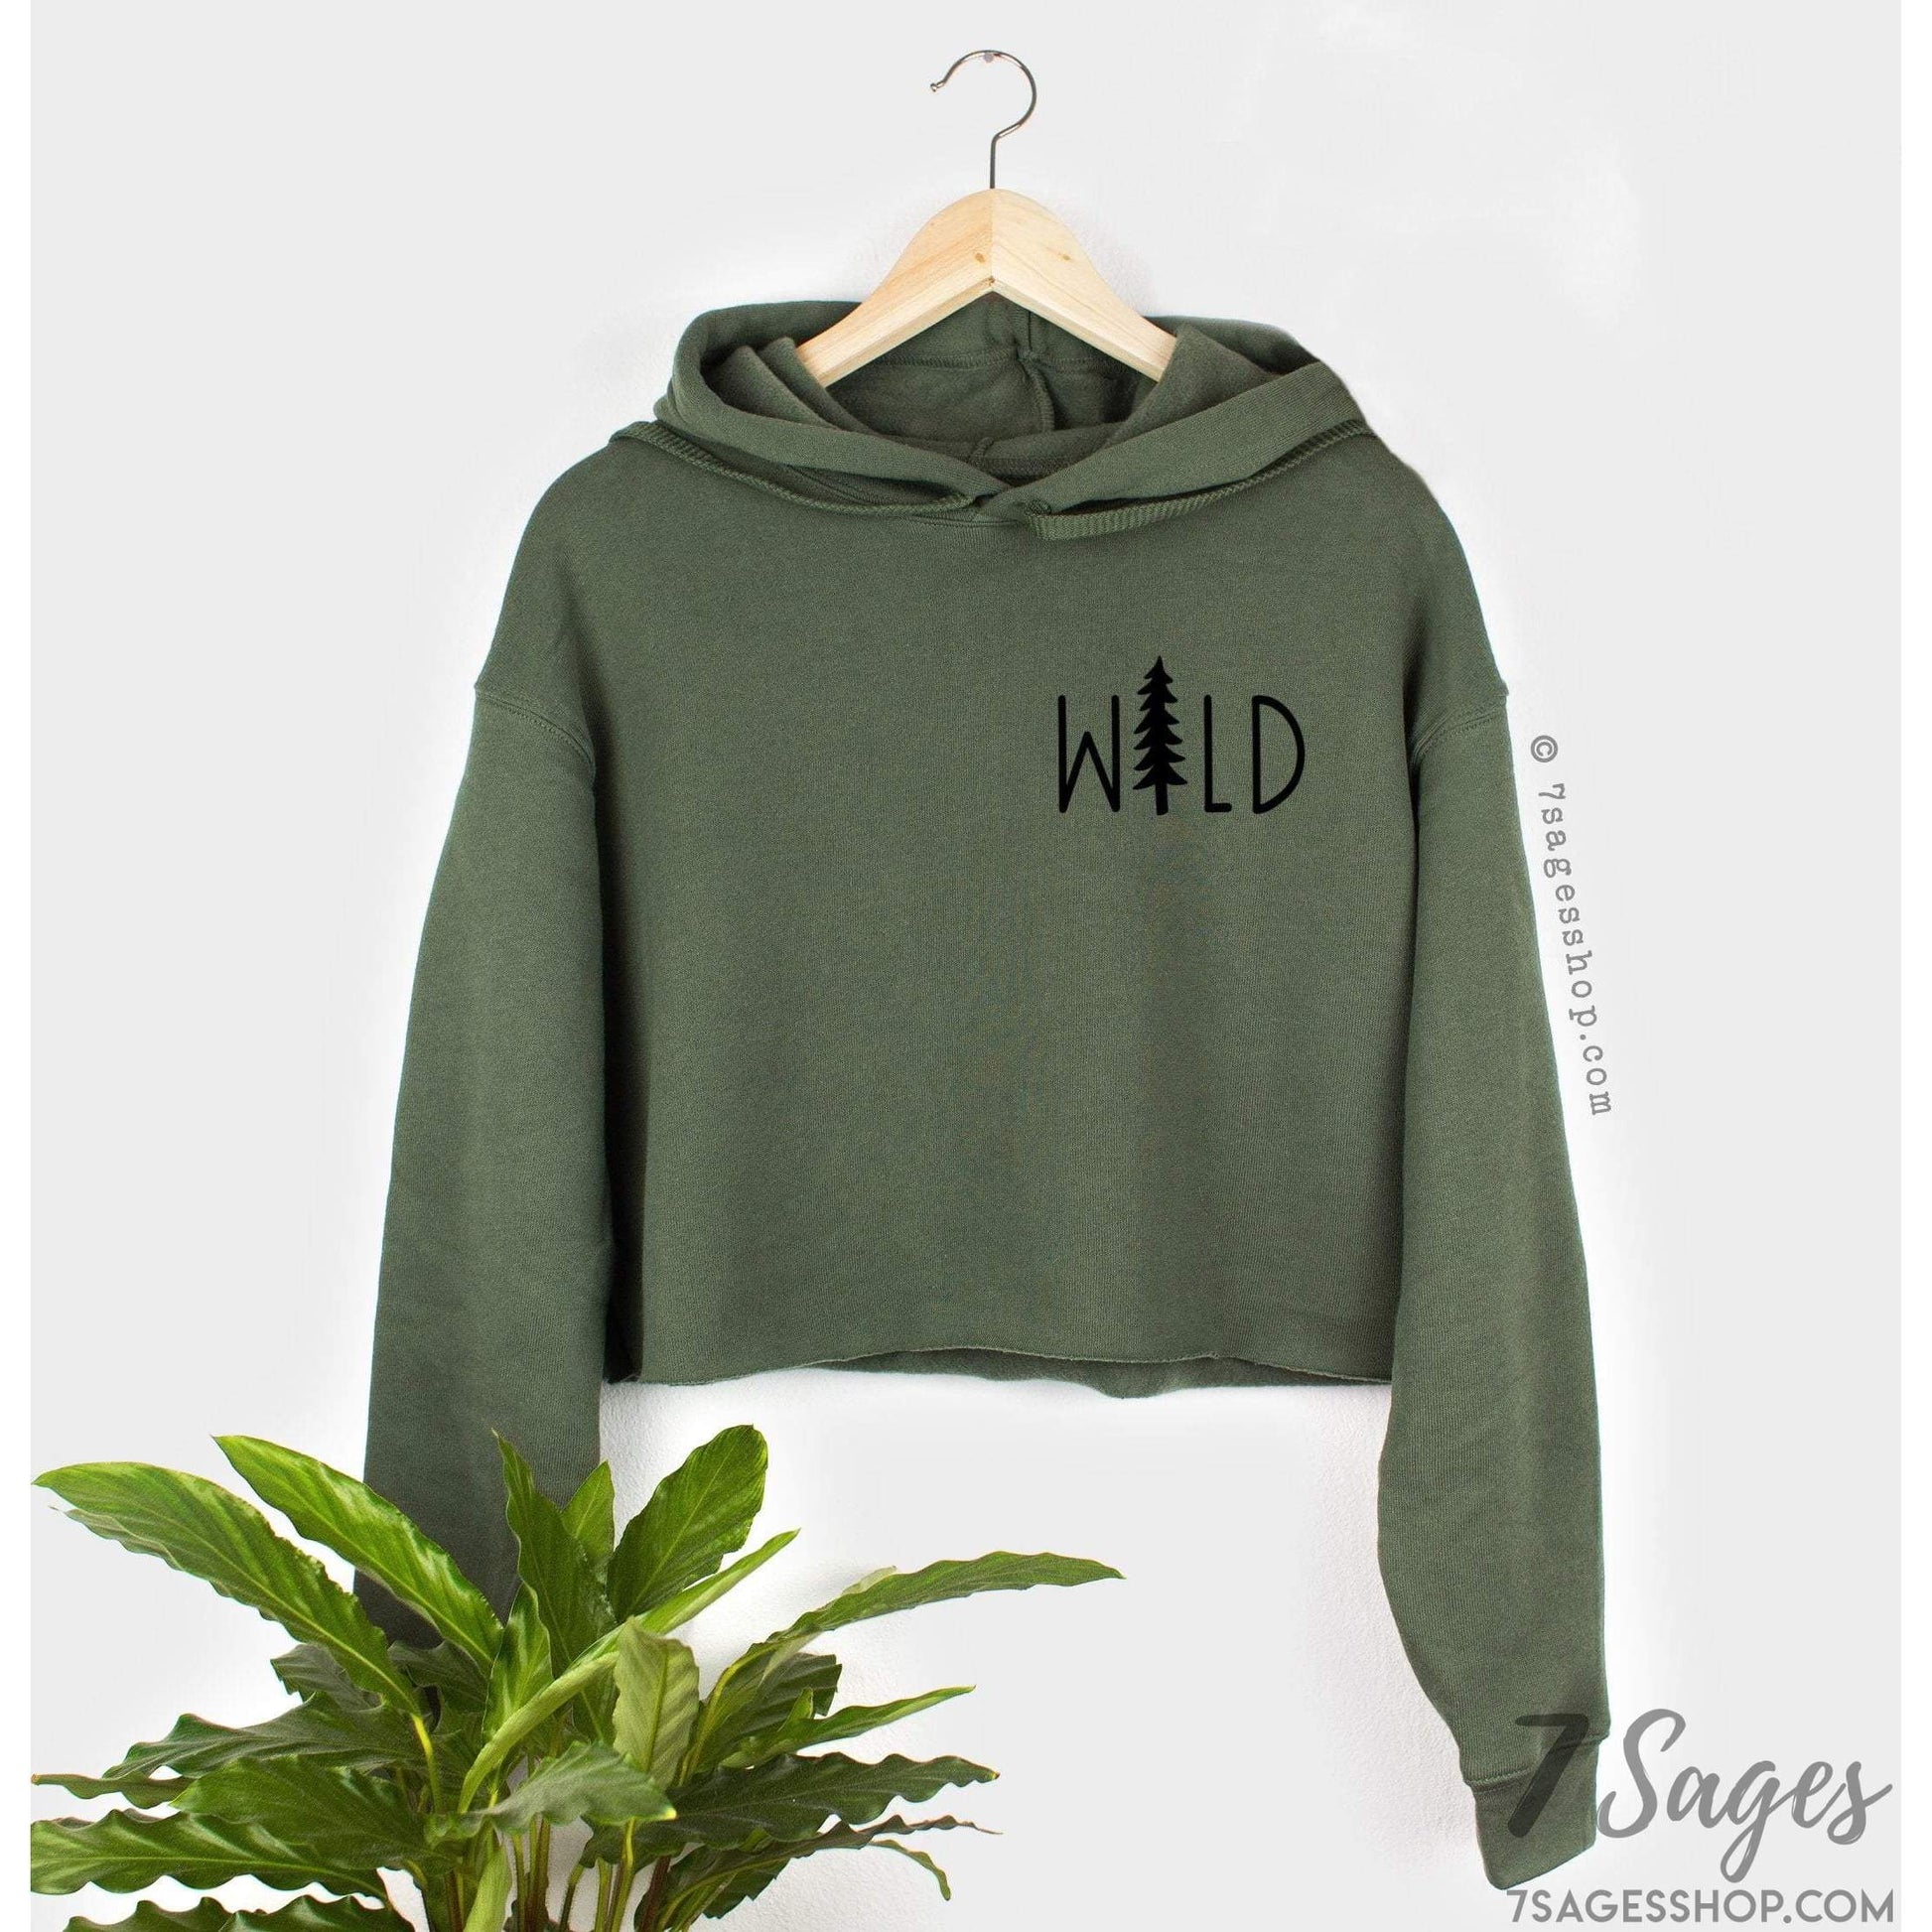 Wild Cropped Sweatshirt - Camping Sweatshirt - Outdoorsy Sweater - Camping Shirt - Fleece Sweatshirt